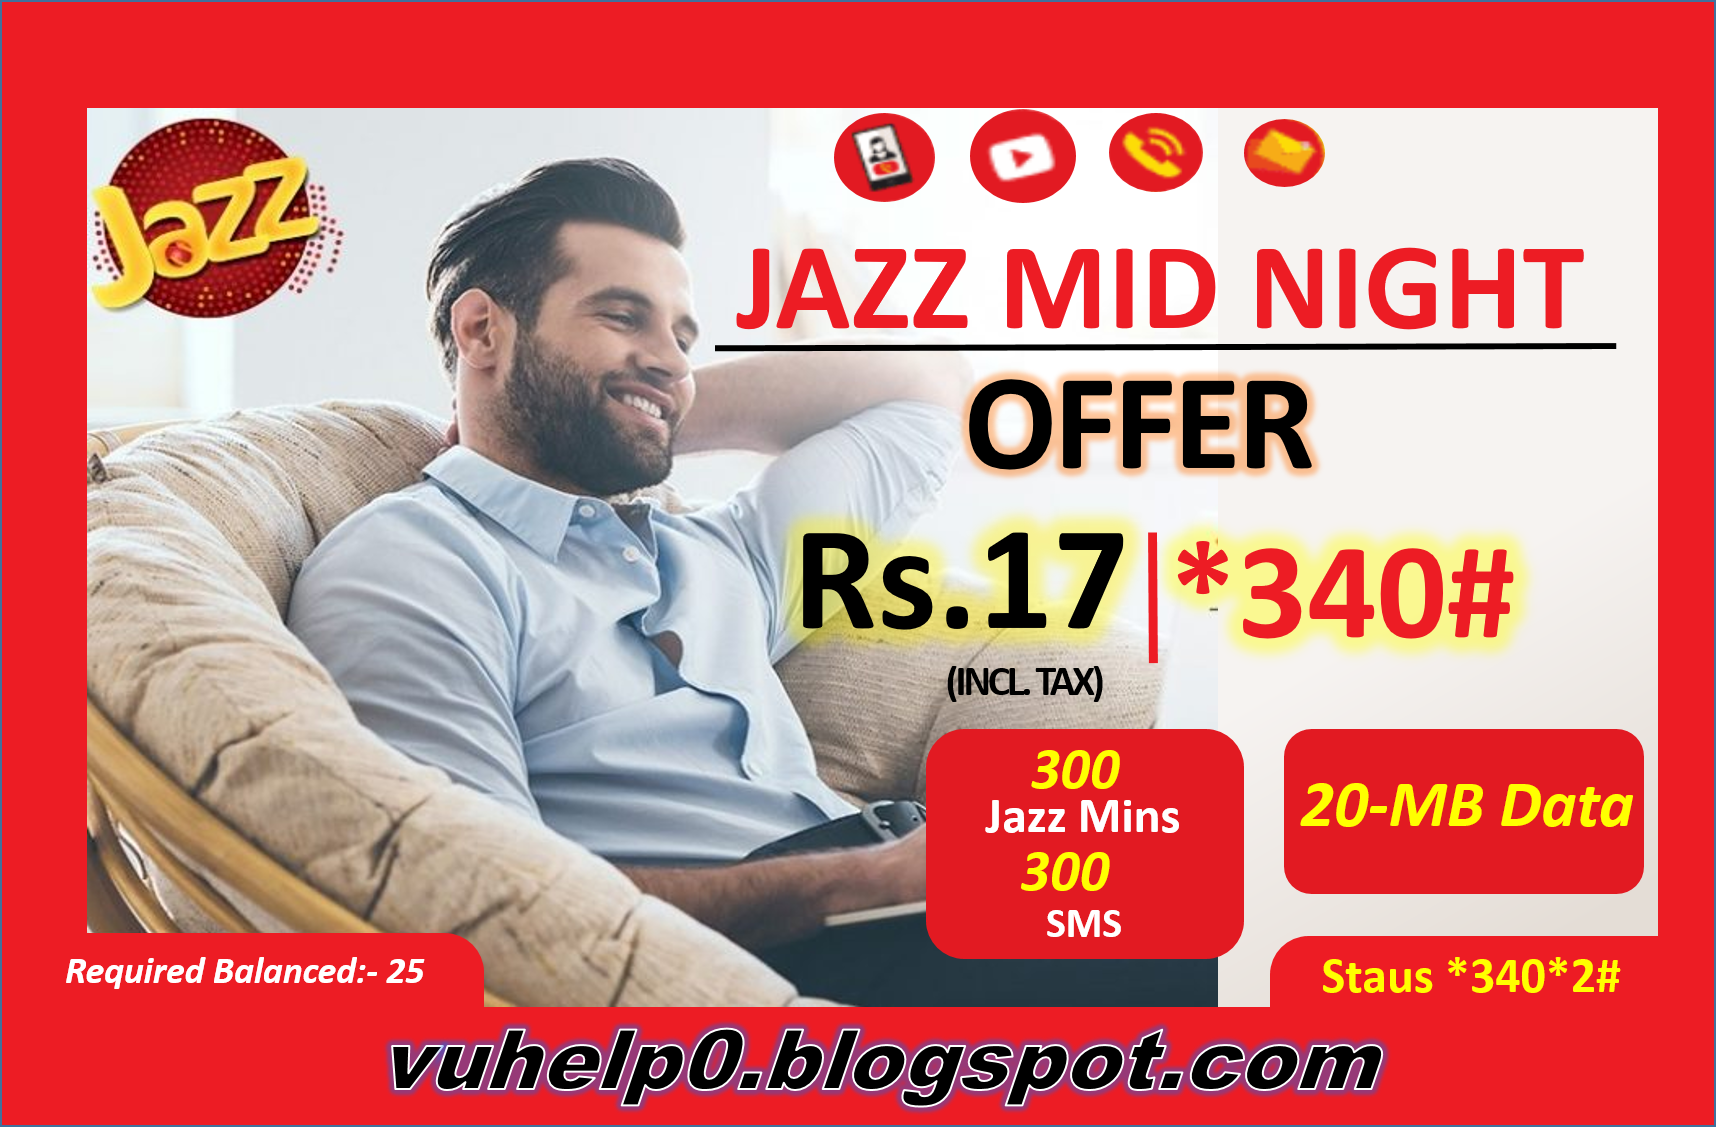 Jazz Mid Night Offer | Jazz *340# Offer